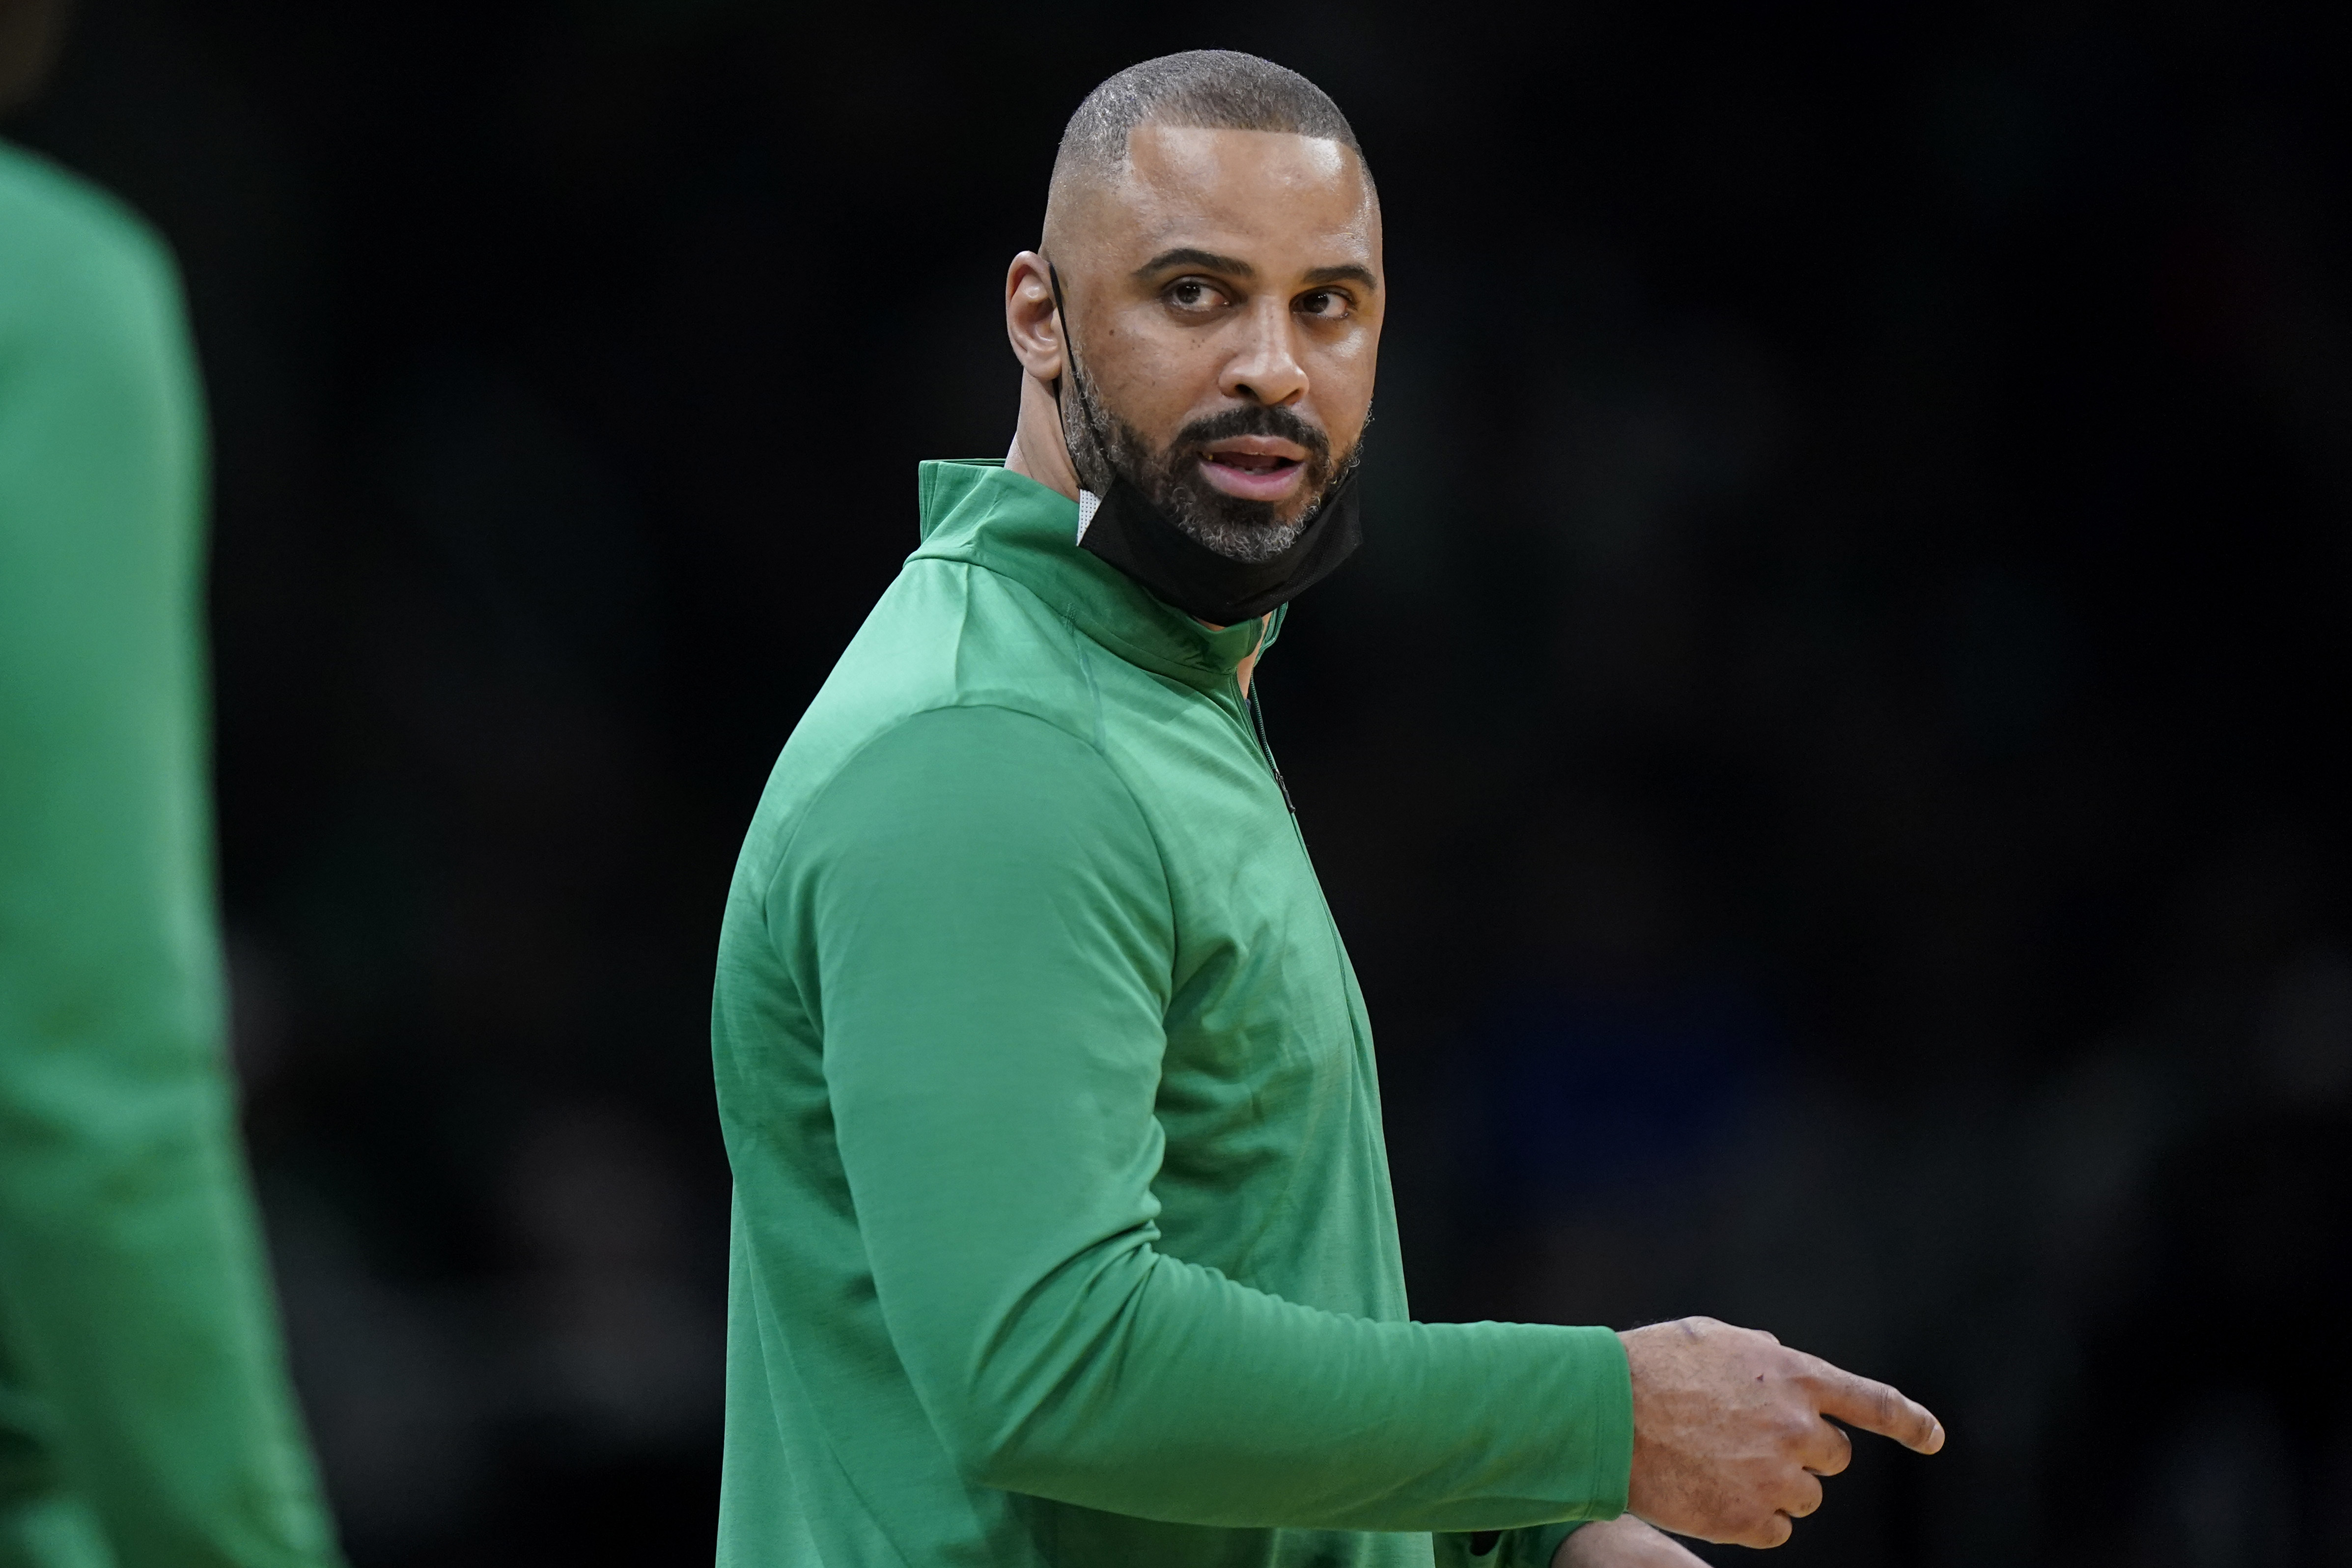 Ime Udoka Faces Discipline from Celtics for Office Relationship - Blazer's  Edge